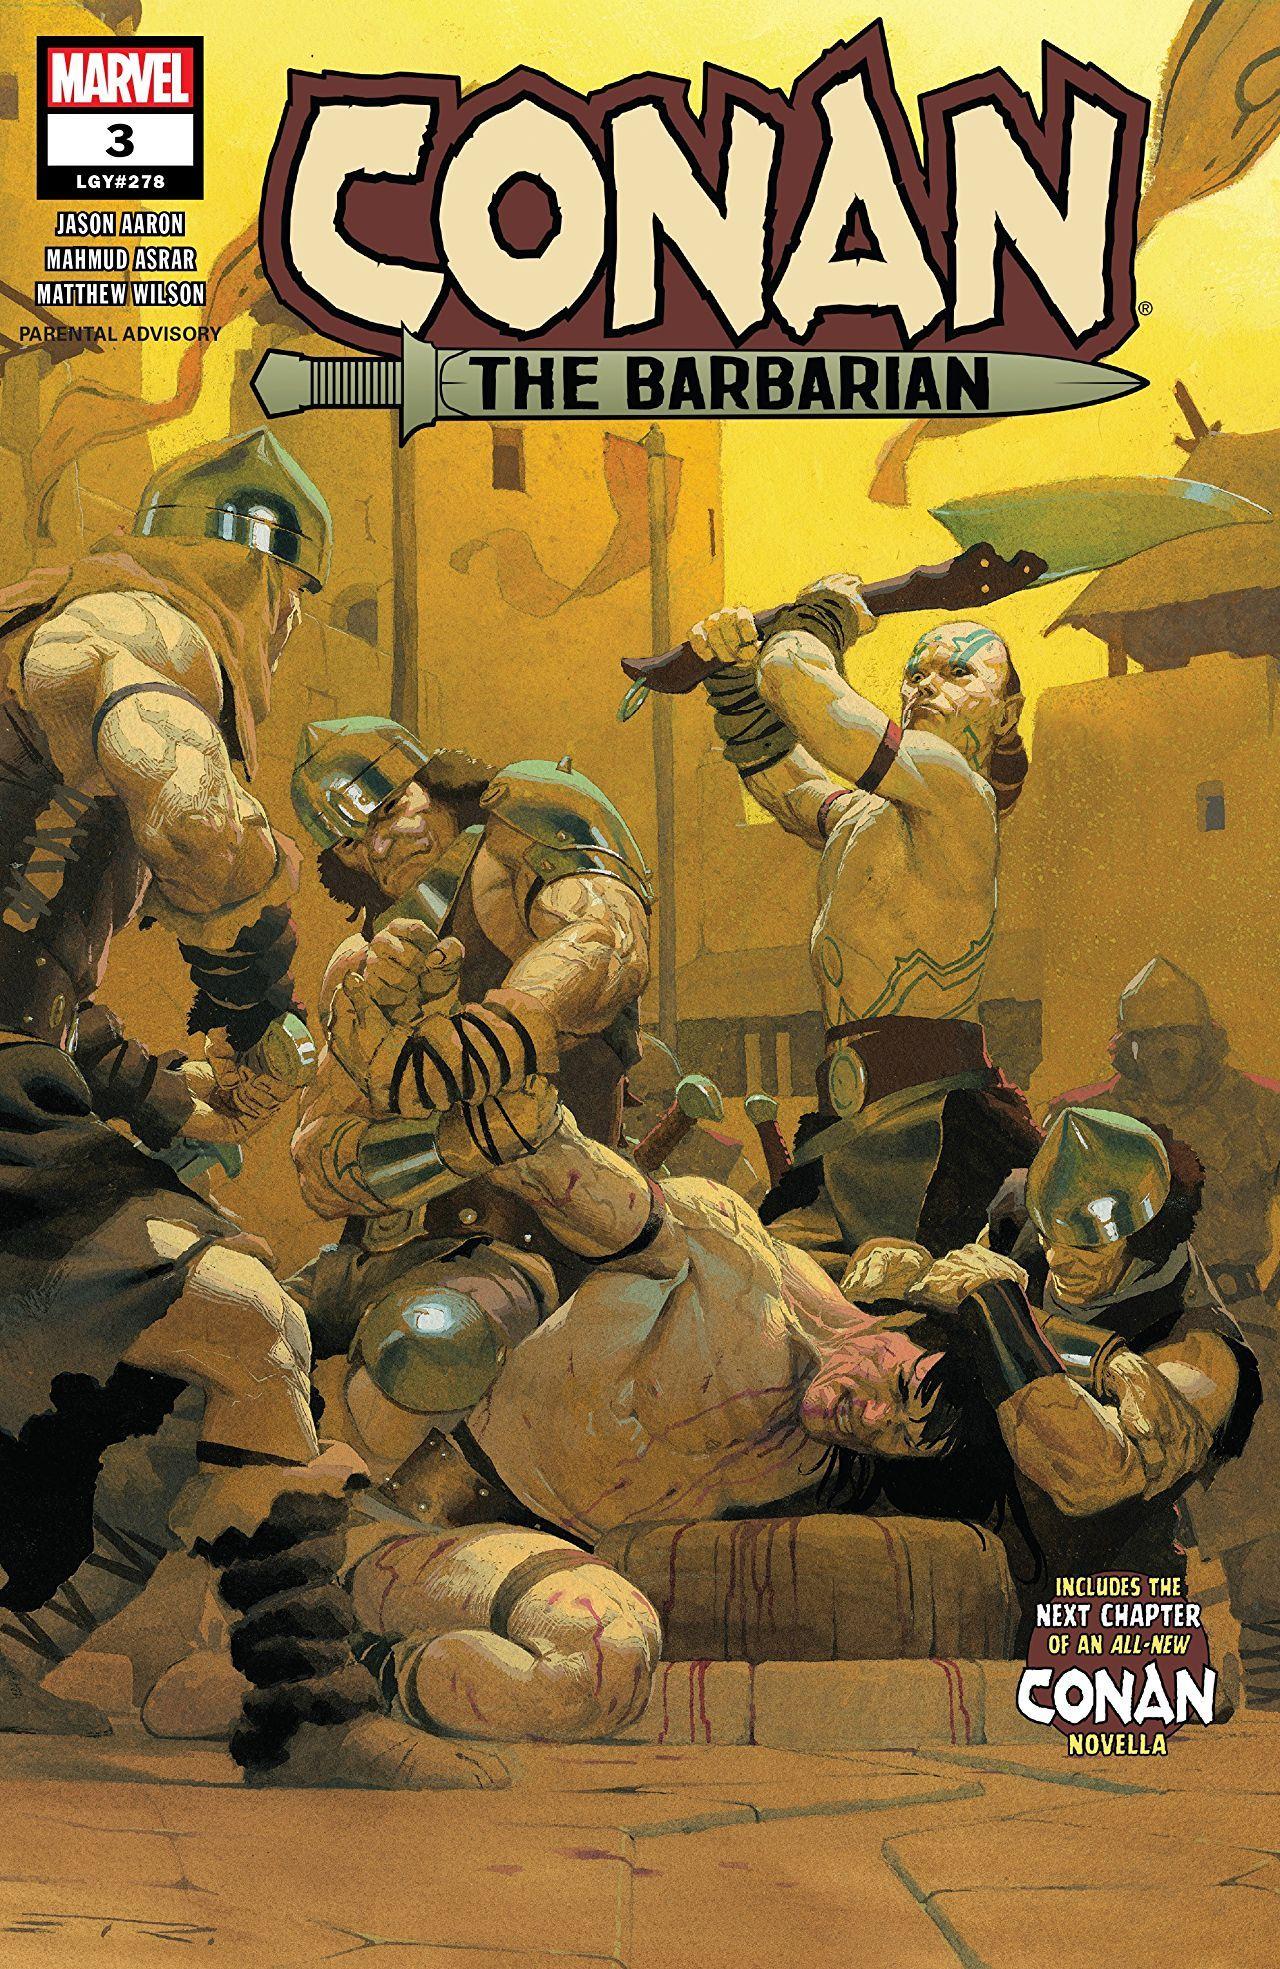 Conan the Barbarian Vol. 3 #3